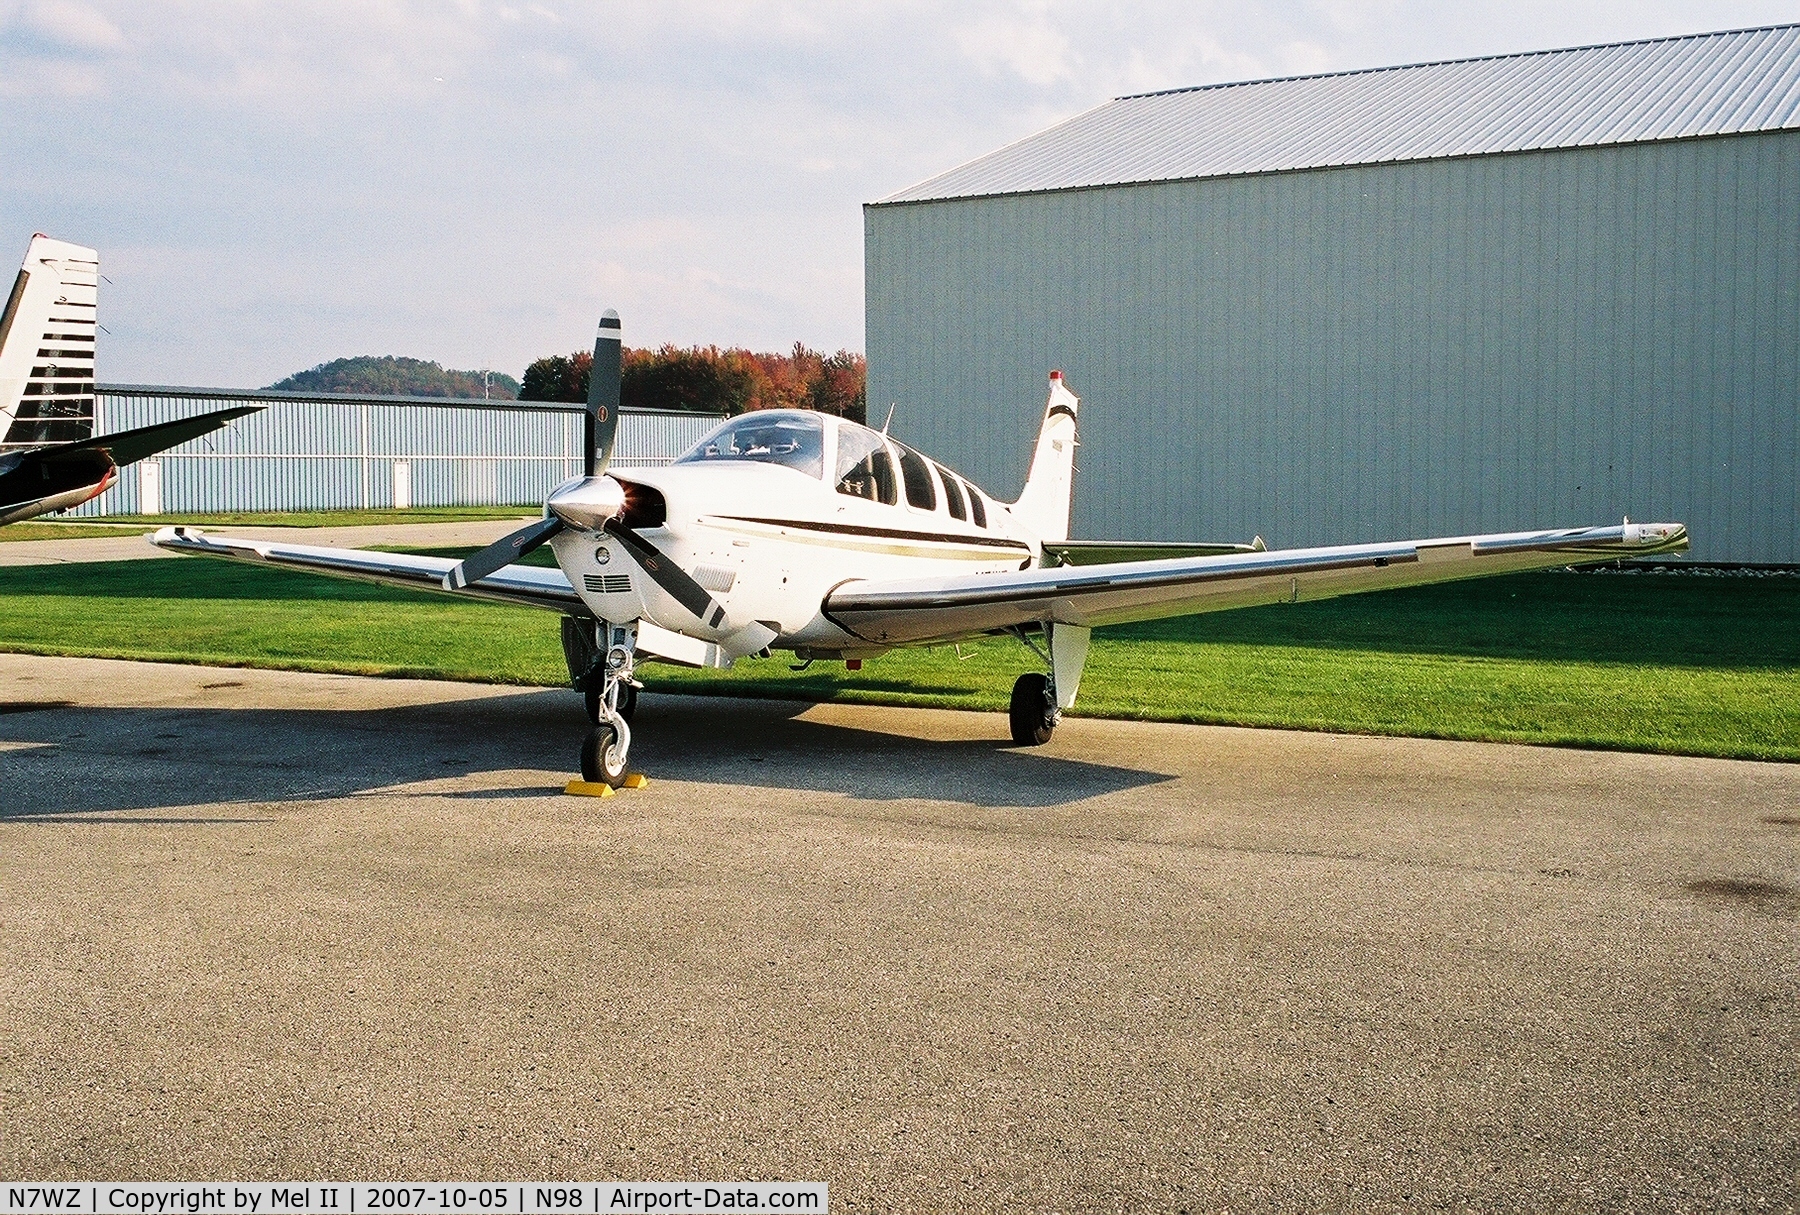 N7WZ, 2005 Raytheon Aircraft Company G36 C/N E-3637, Parked @ Boyne City Municipal Airport (N98)